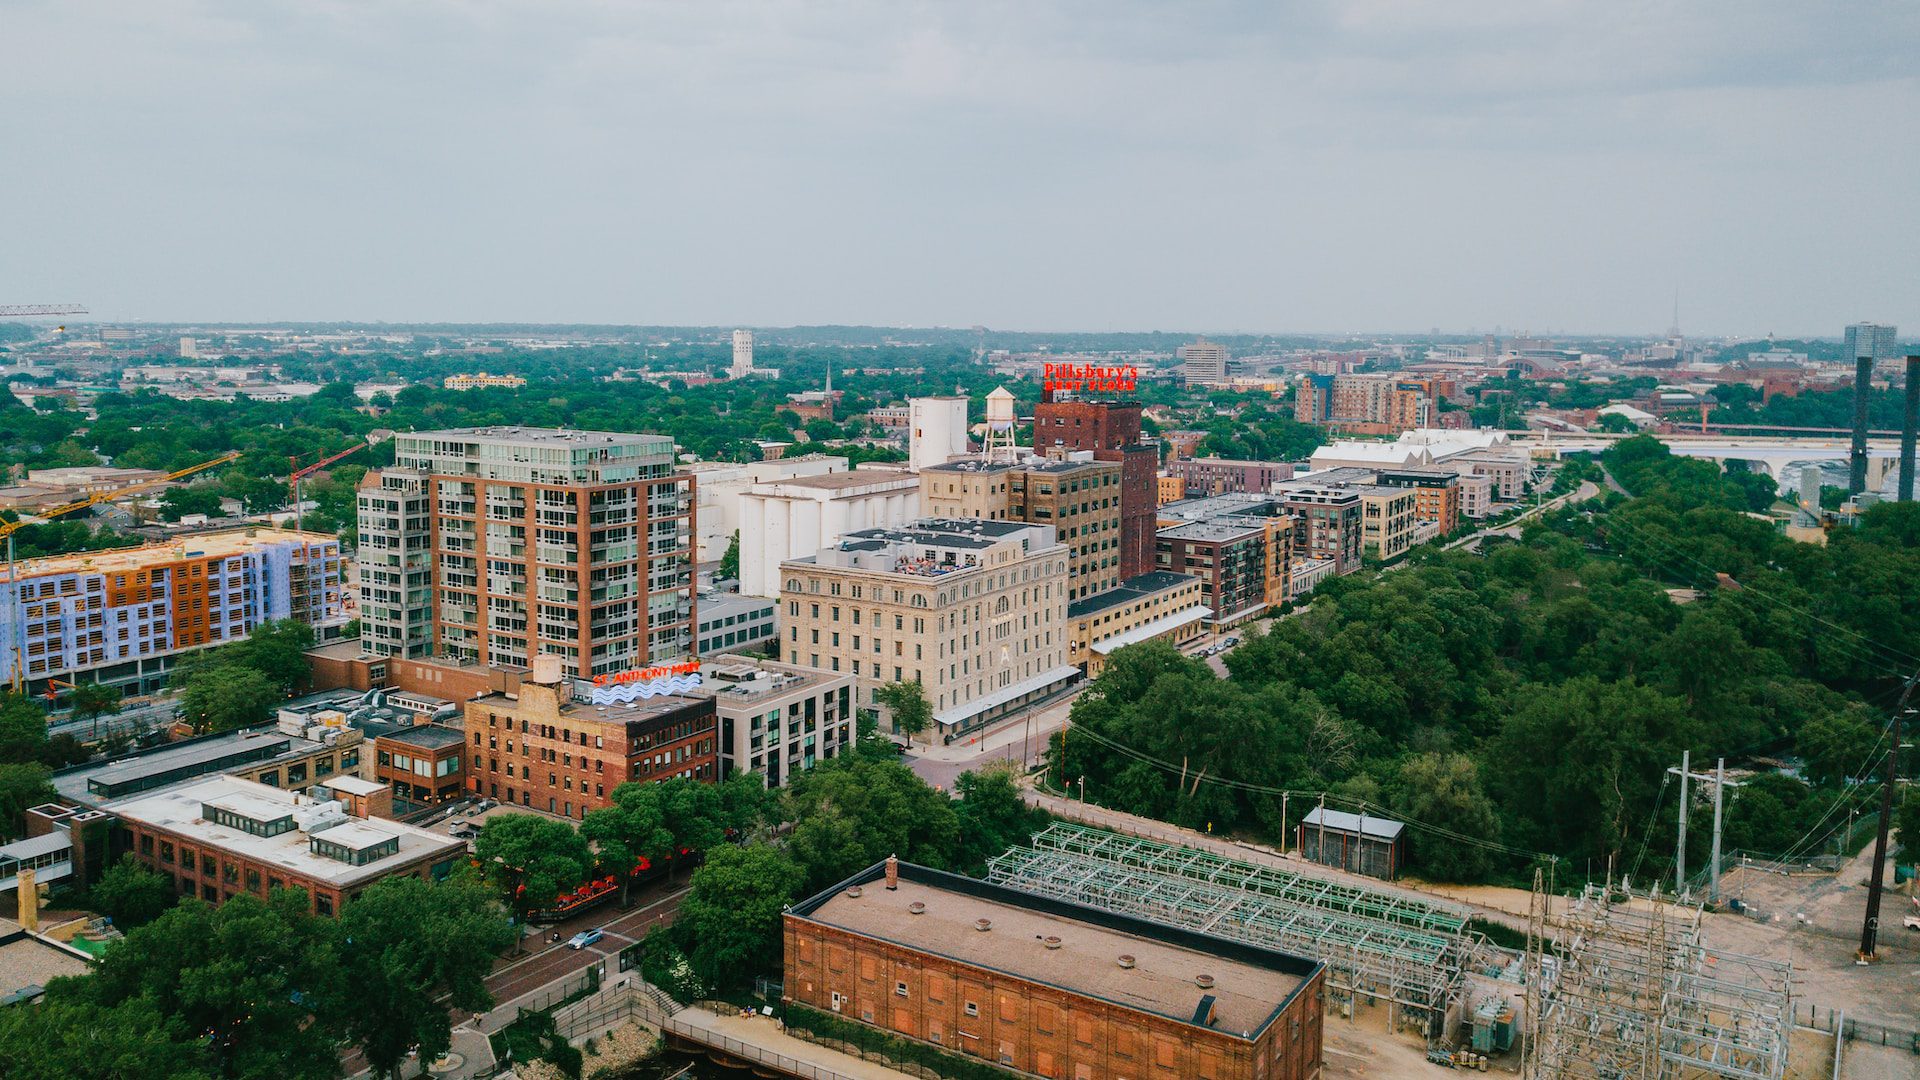 Aerial view of high-rise buildings in Minneapolis, Minnesota.